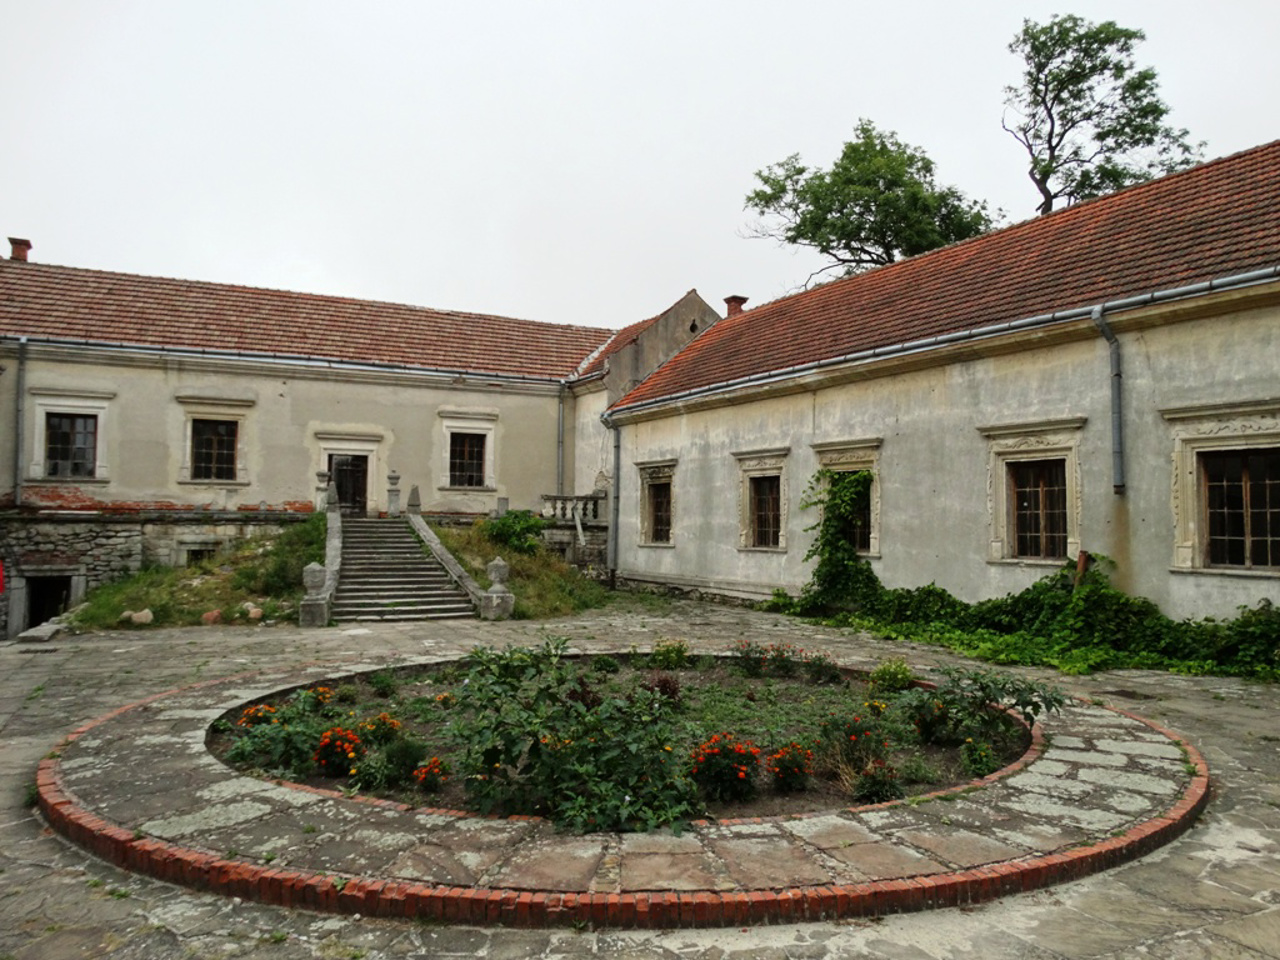 Svirzh Castle